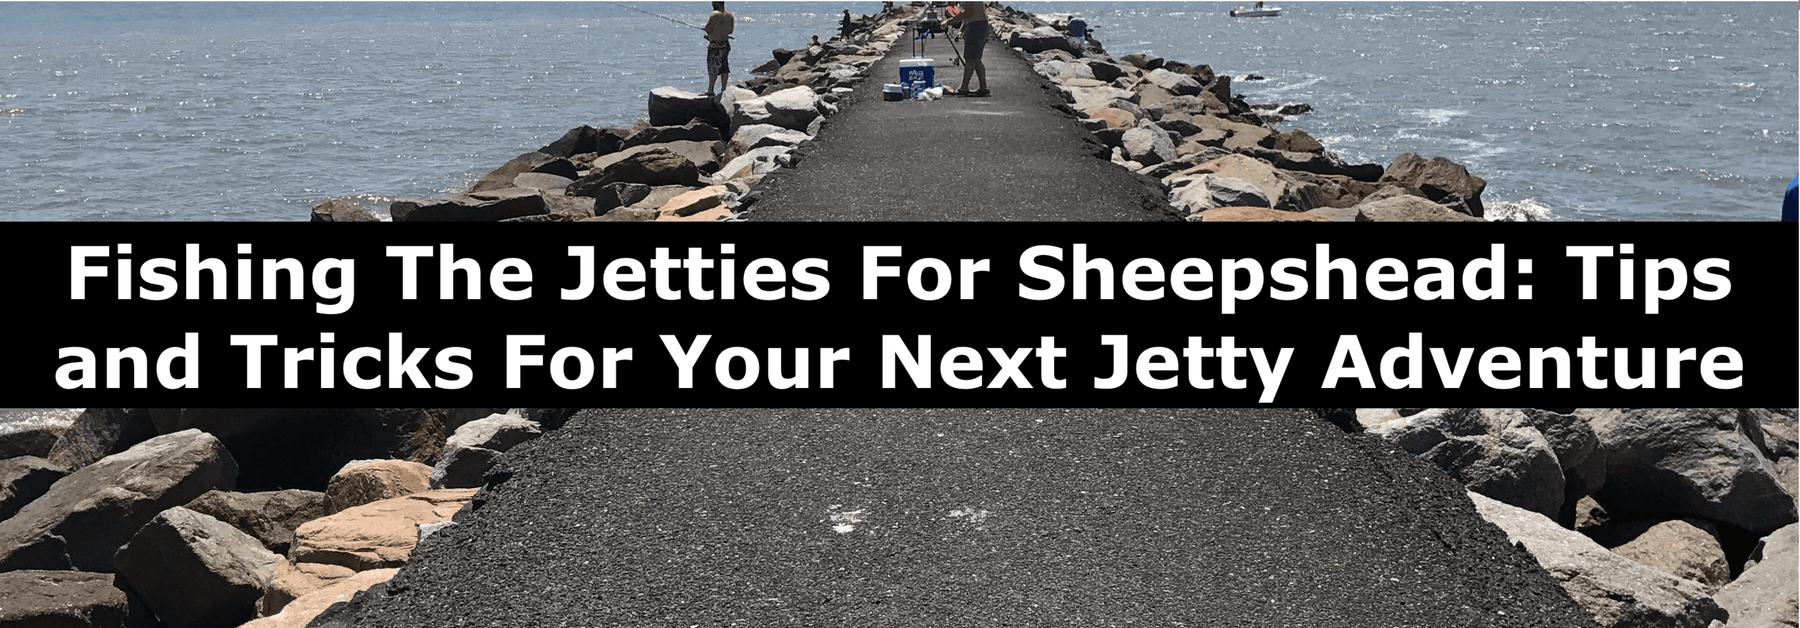 Jetty Fishing For Sheepshead